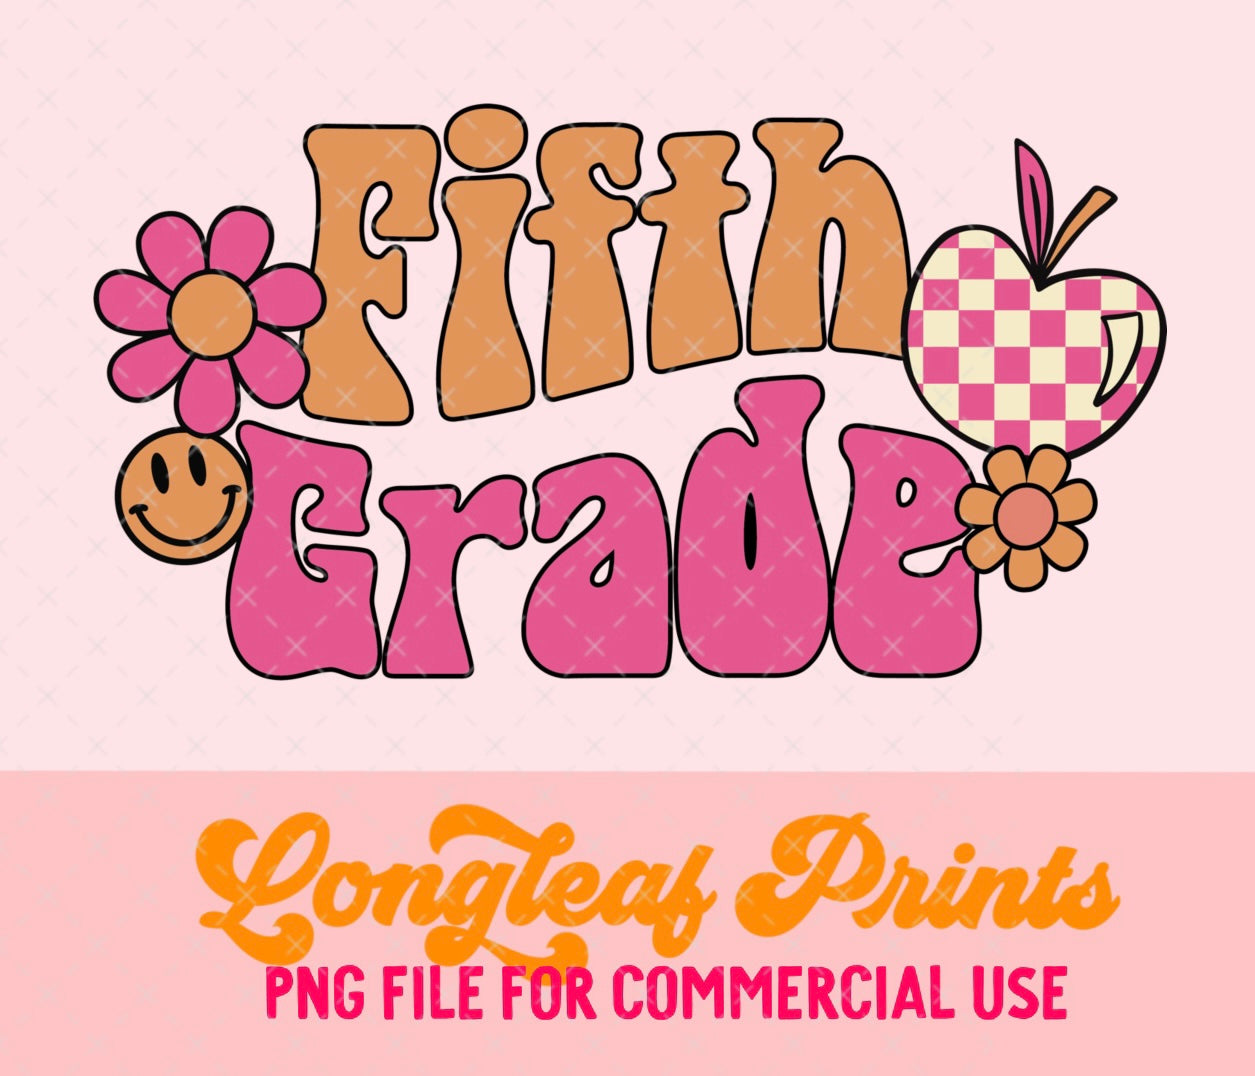 Fifth Grade is Groovy PNG Digital Download Design File